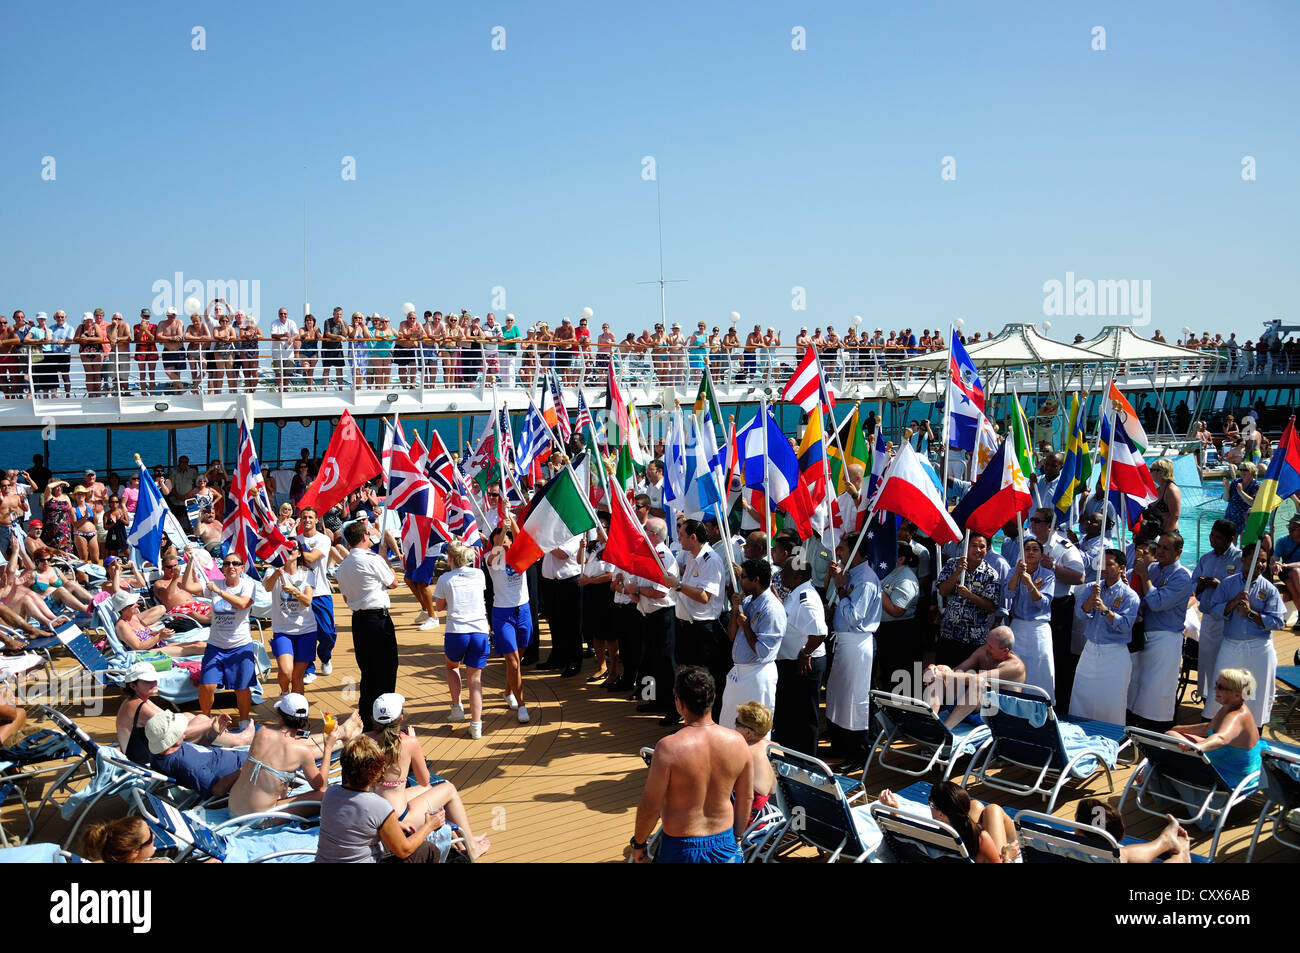 Internationales Personal Prozession an Bord von Royal Caribbean "Grandeur of the Seas" Kreuzfahrt Schiff, Adria, Mittelmeer, Europa Stockfoto